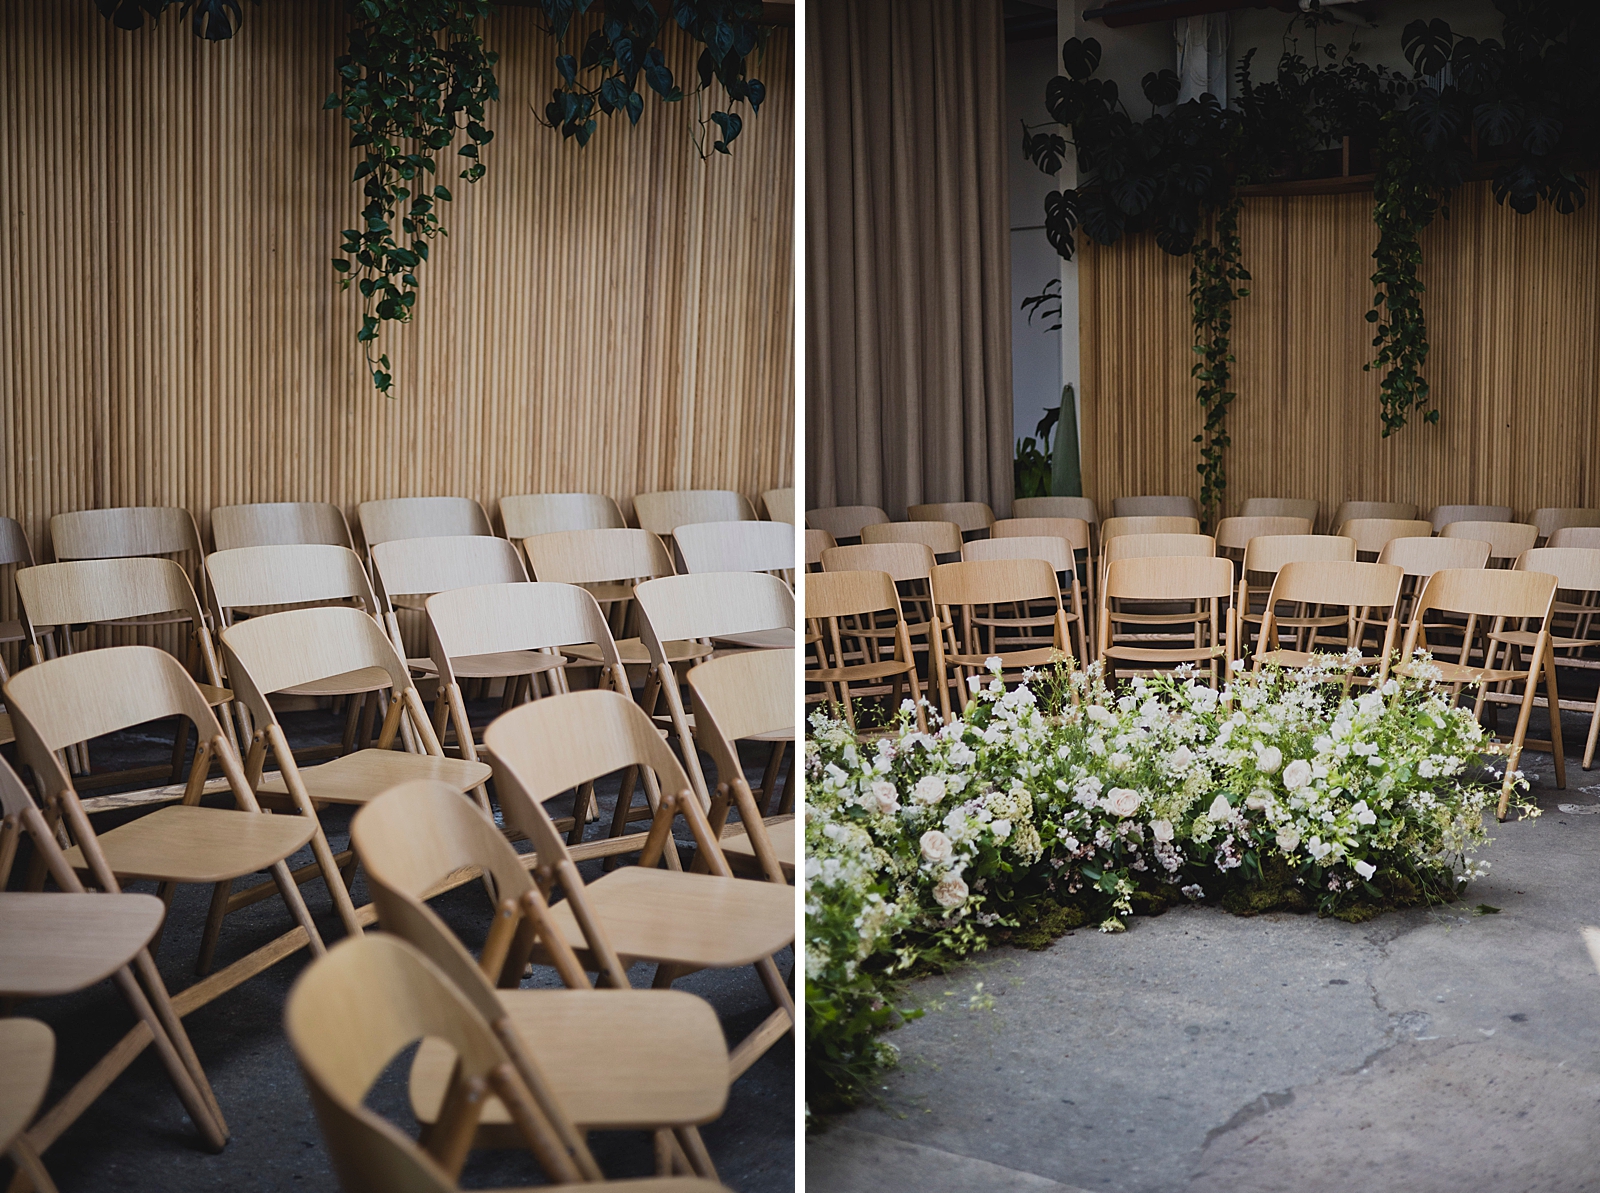 Left photo: Close up shot of ceremony seating.
Right photo: Shot of ceremony seating and altar flower arrangements. 